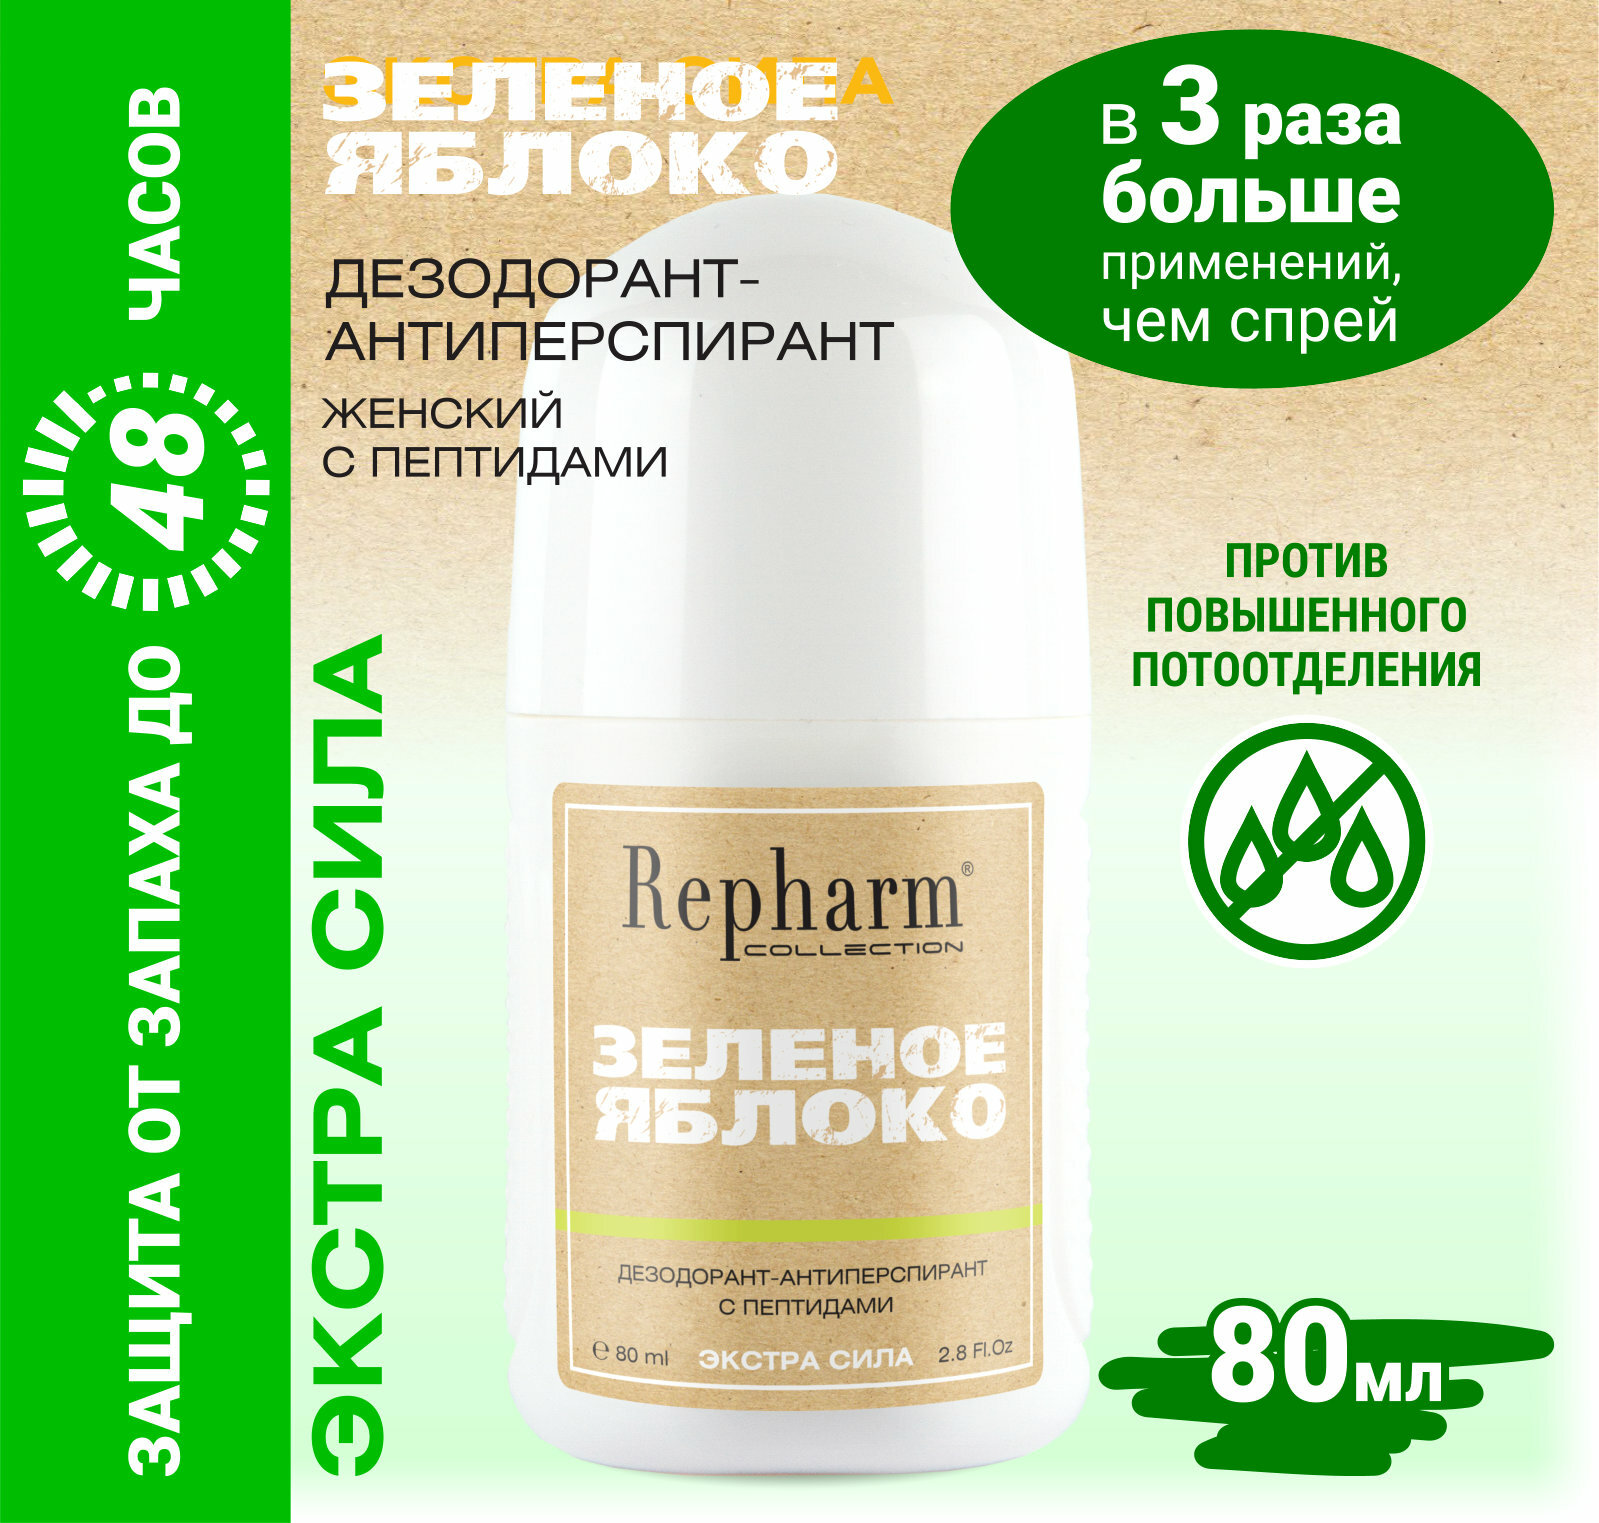 Дезодорант - антиперспирант Repharm COLLECTION Зеленое яблоко 80 мл с пептидами for women экстра сила